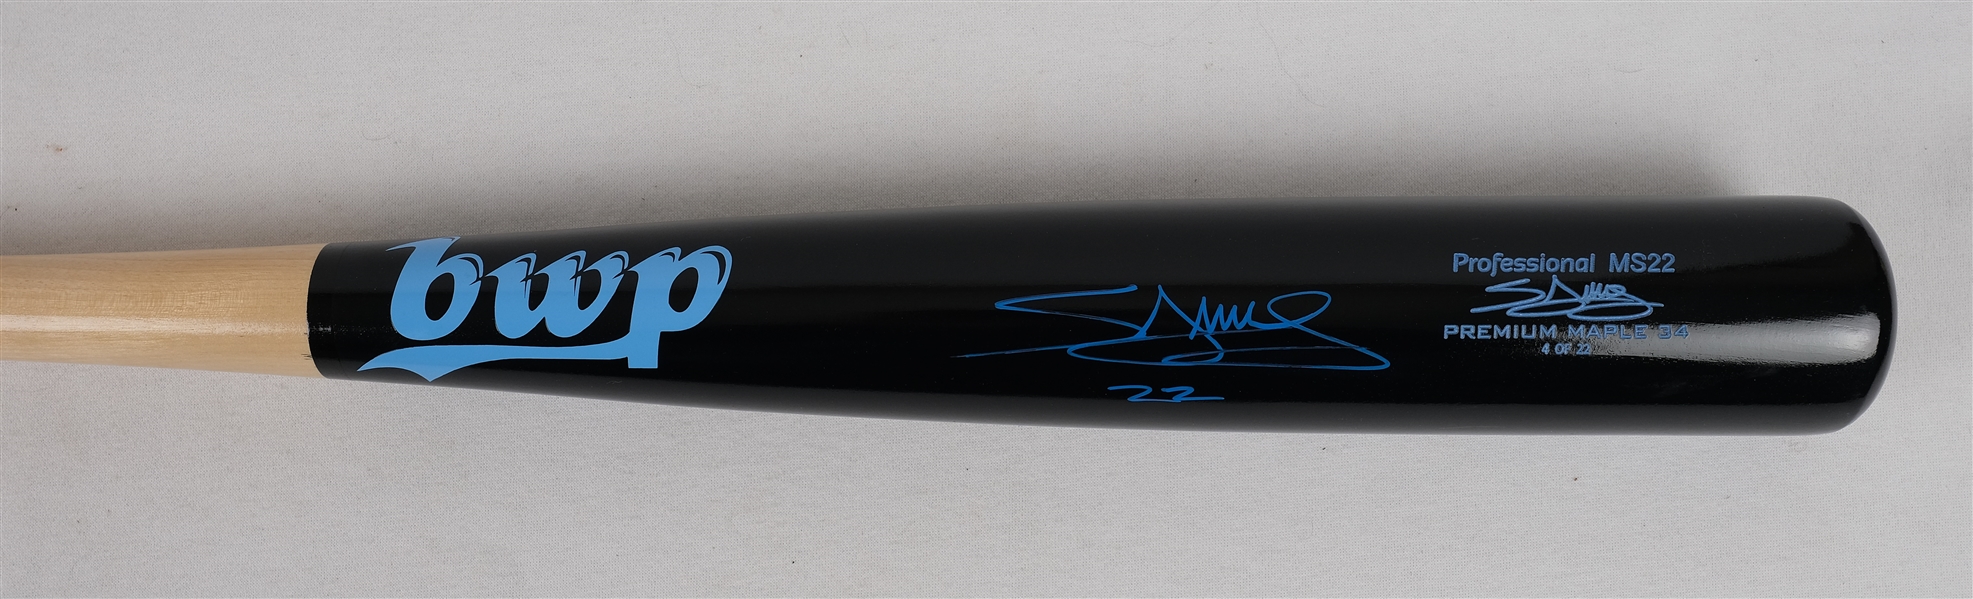 Miguel Sano Autographed Baseball Bat